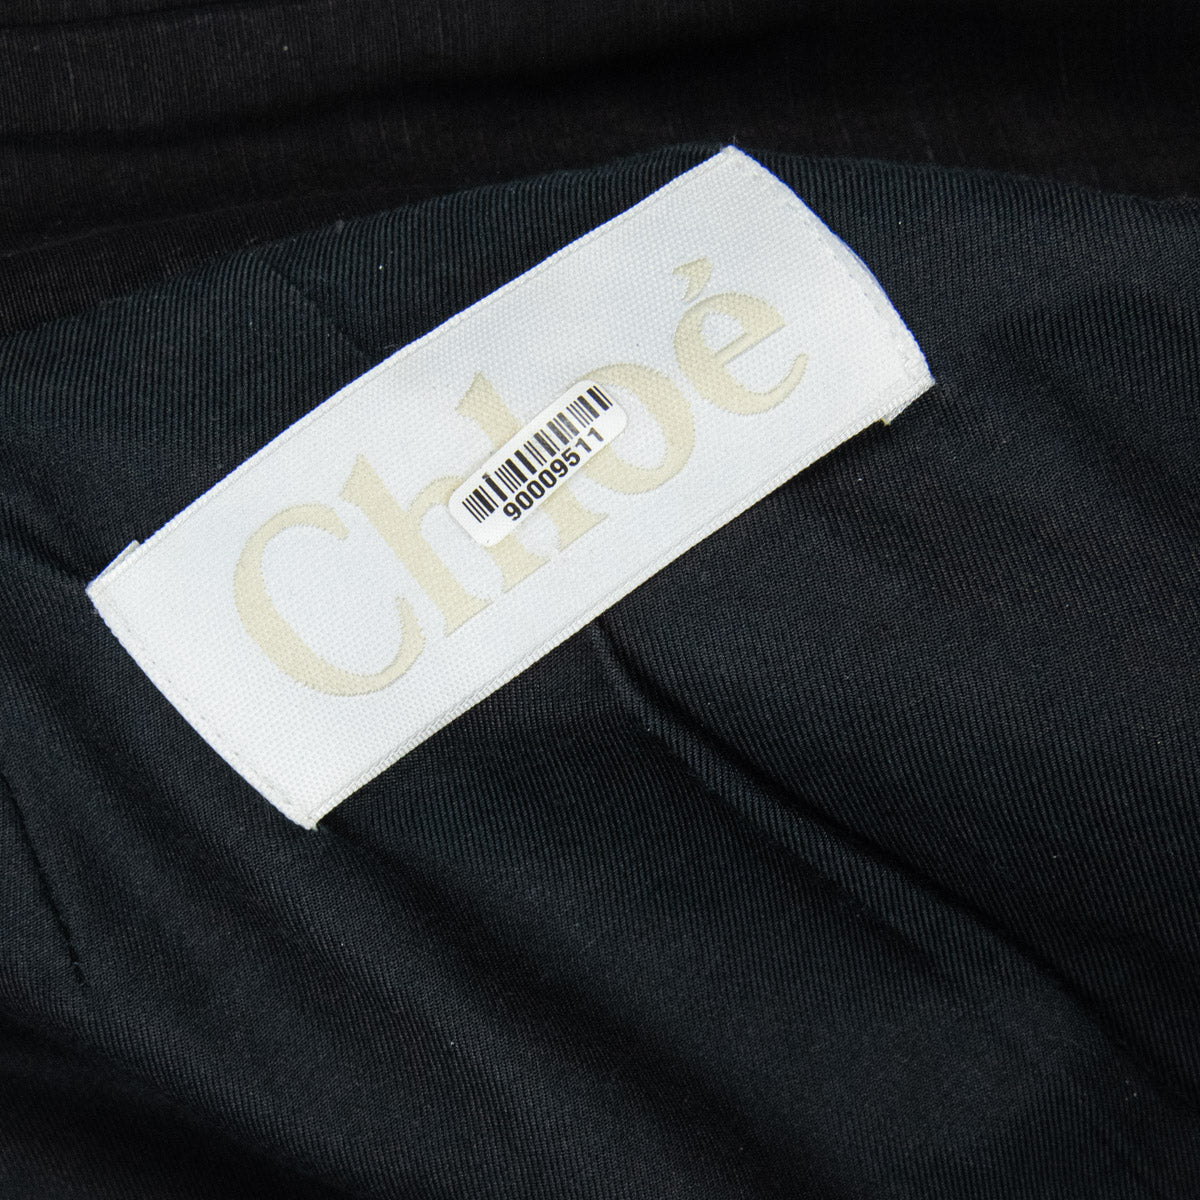 Chloe Black Linen Car Coat Size L | US 10 | FR 42 - Love that Bag etc - Preowned Authentic Designer Handbags & Preloved Fashions